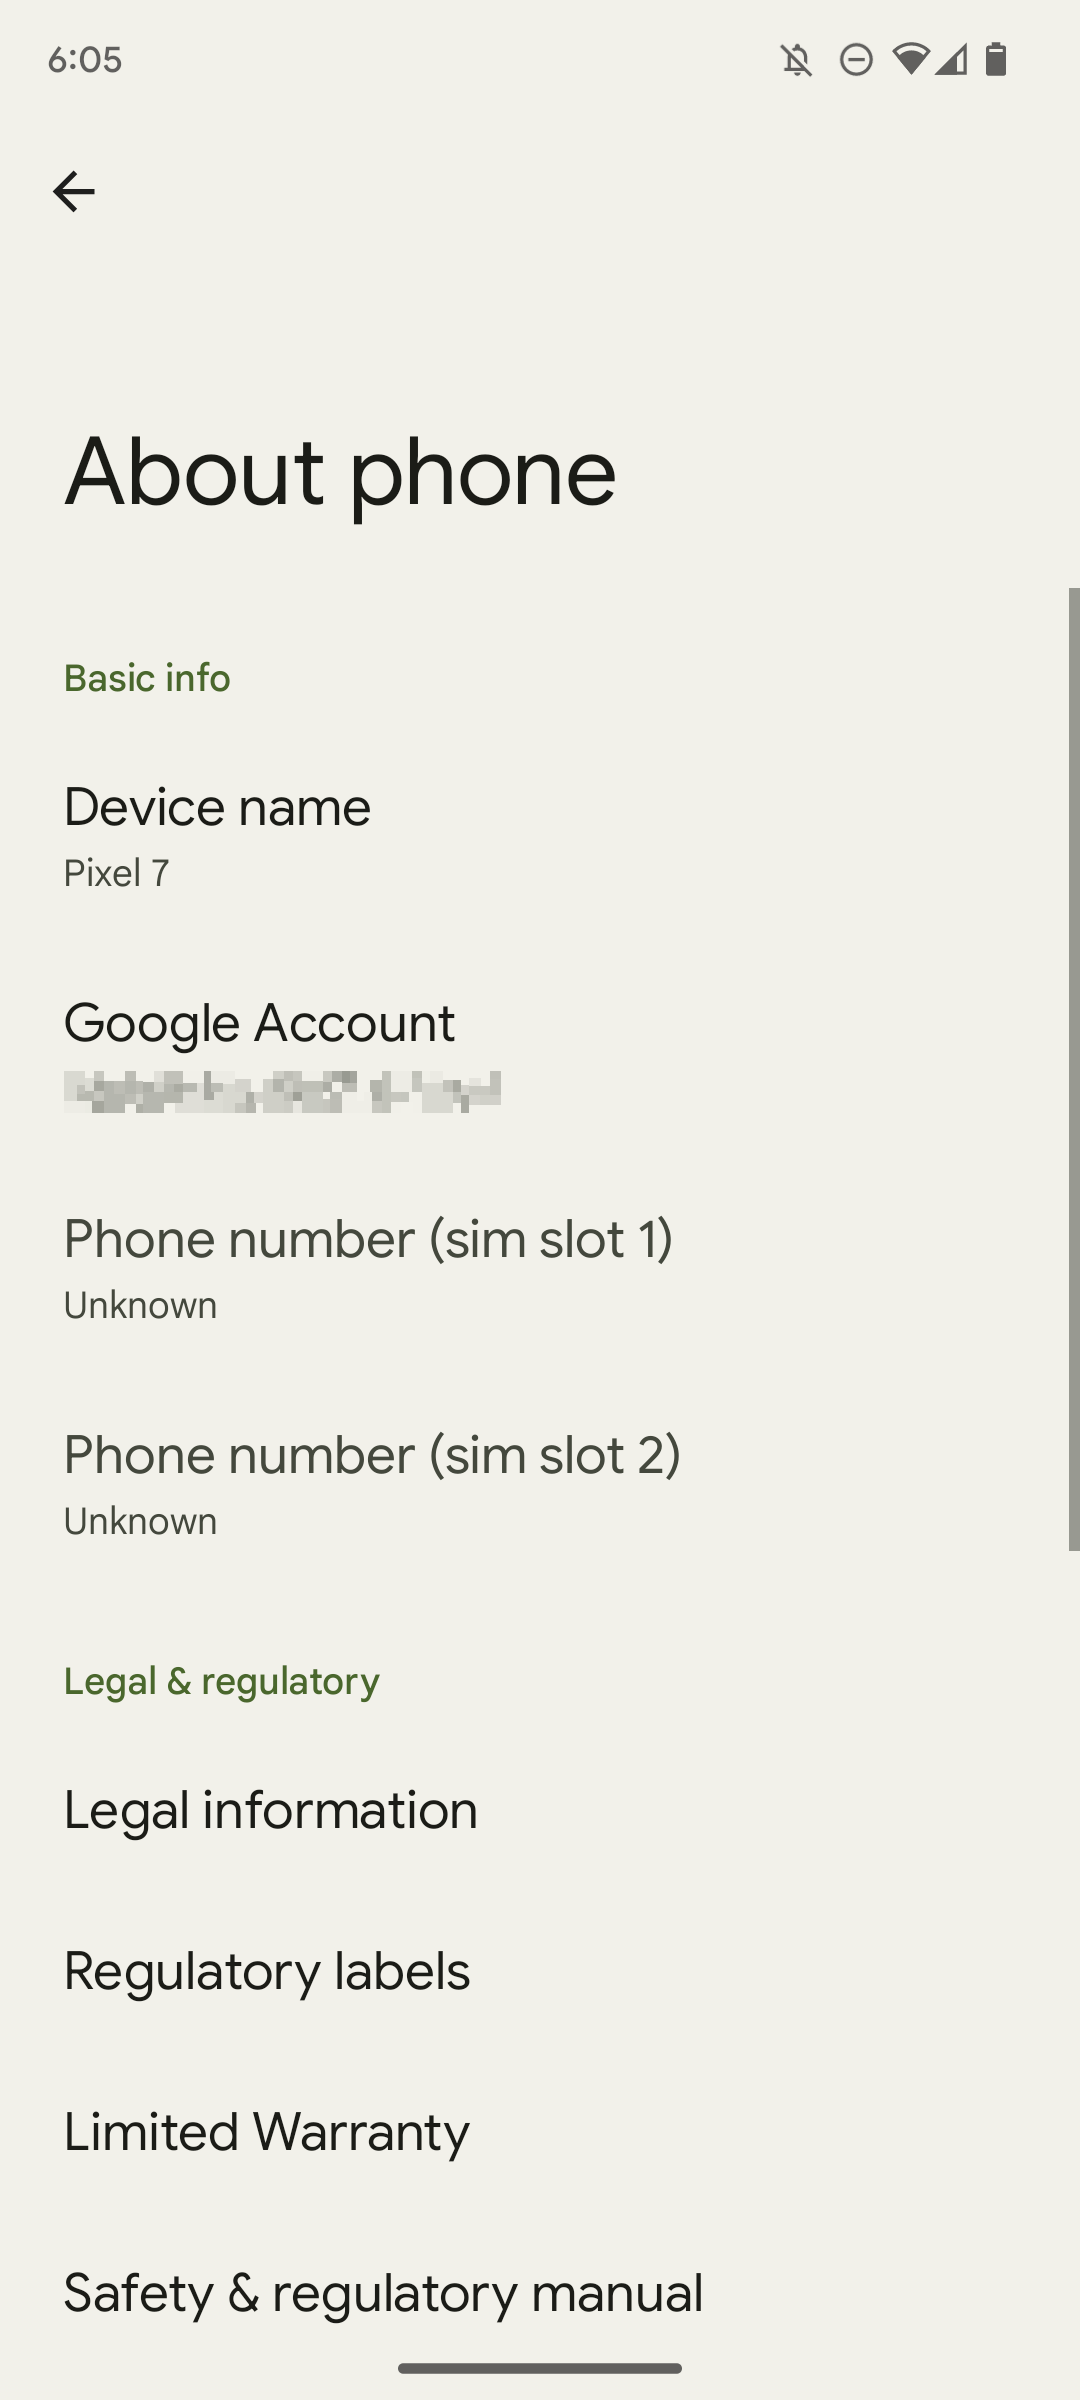 Screenshot of Google Pixel 7's About phone settings screen